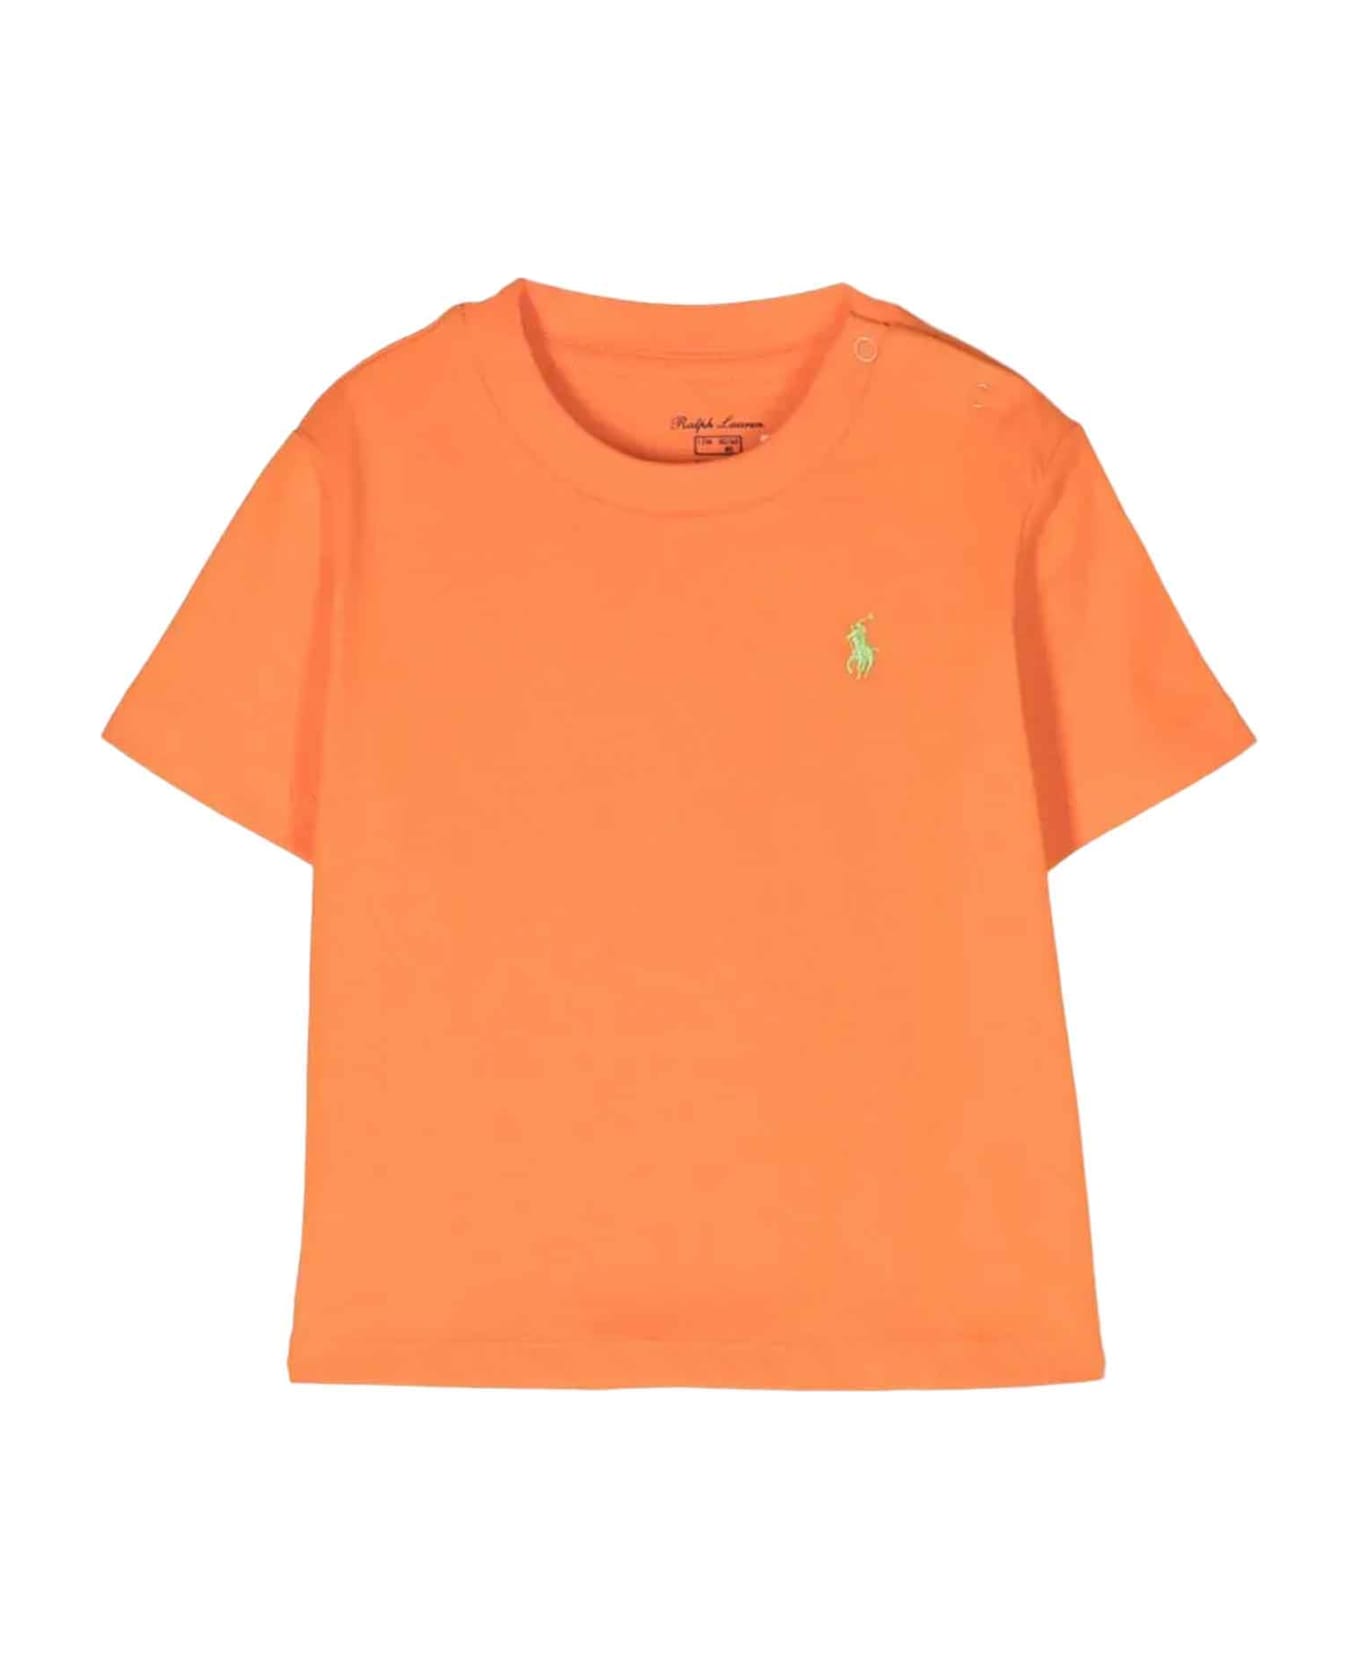 Ralph Lauren Orange T-shirt Baby Boy - Arancio